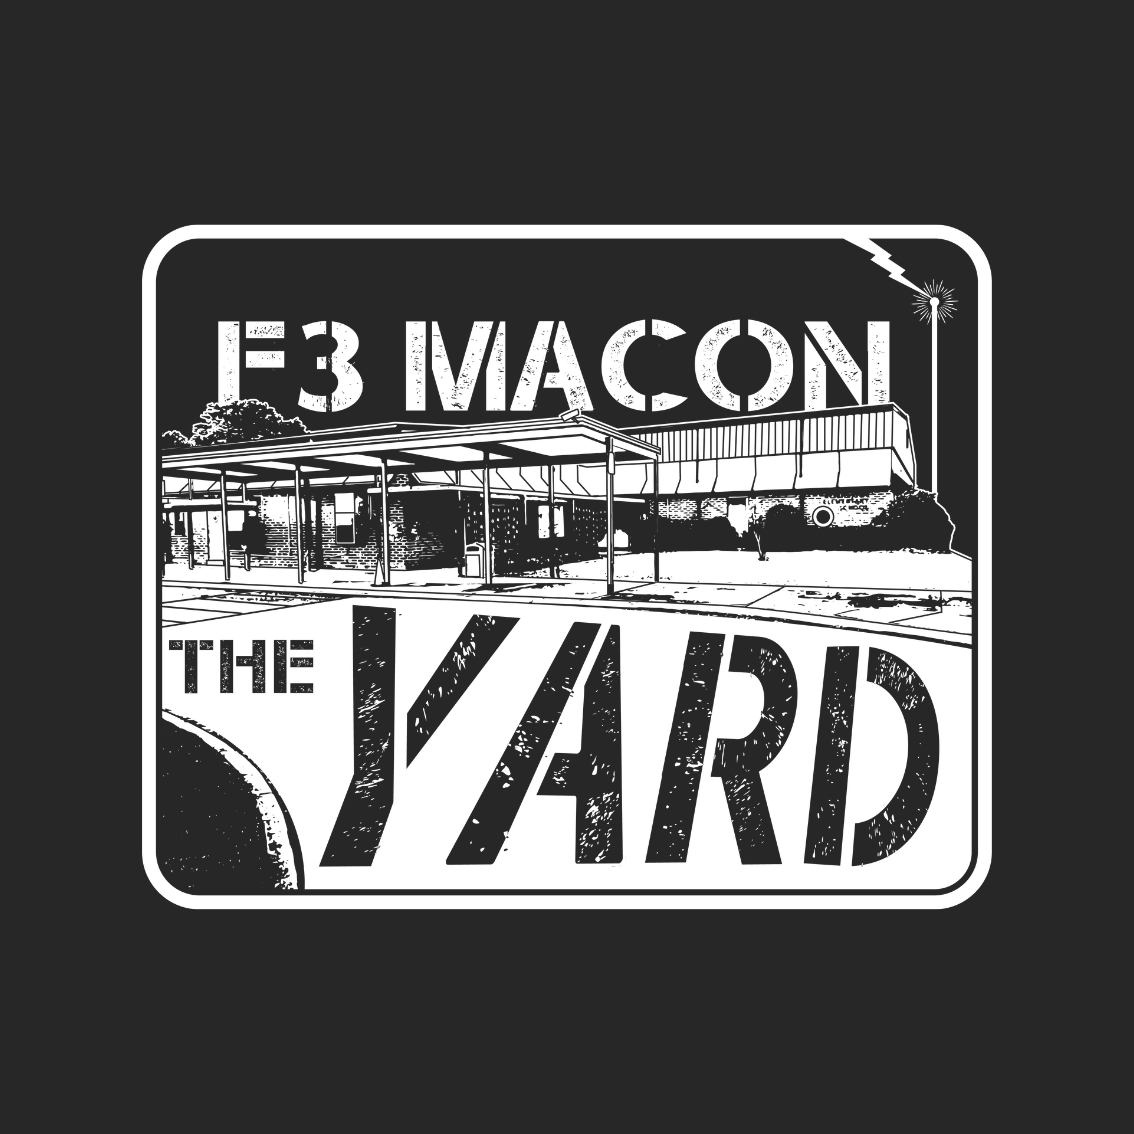 F3 Macon The Yard Pre-Order December 2022